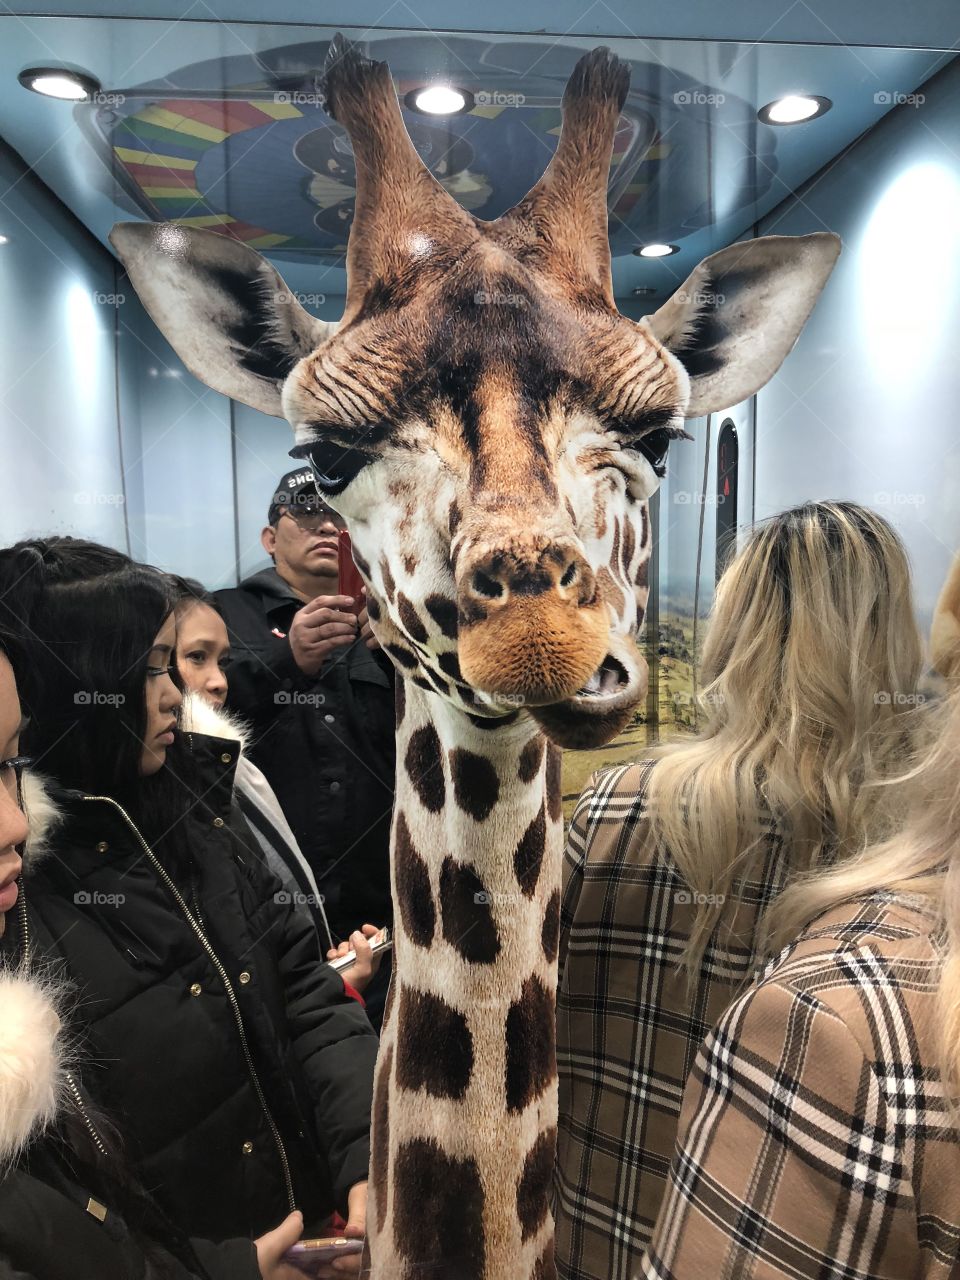 Are you having a giraffe 